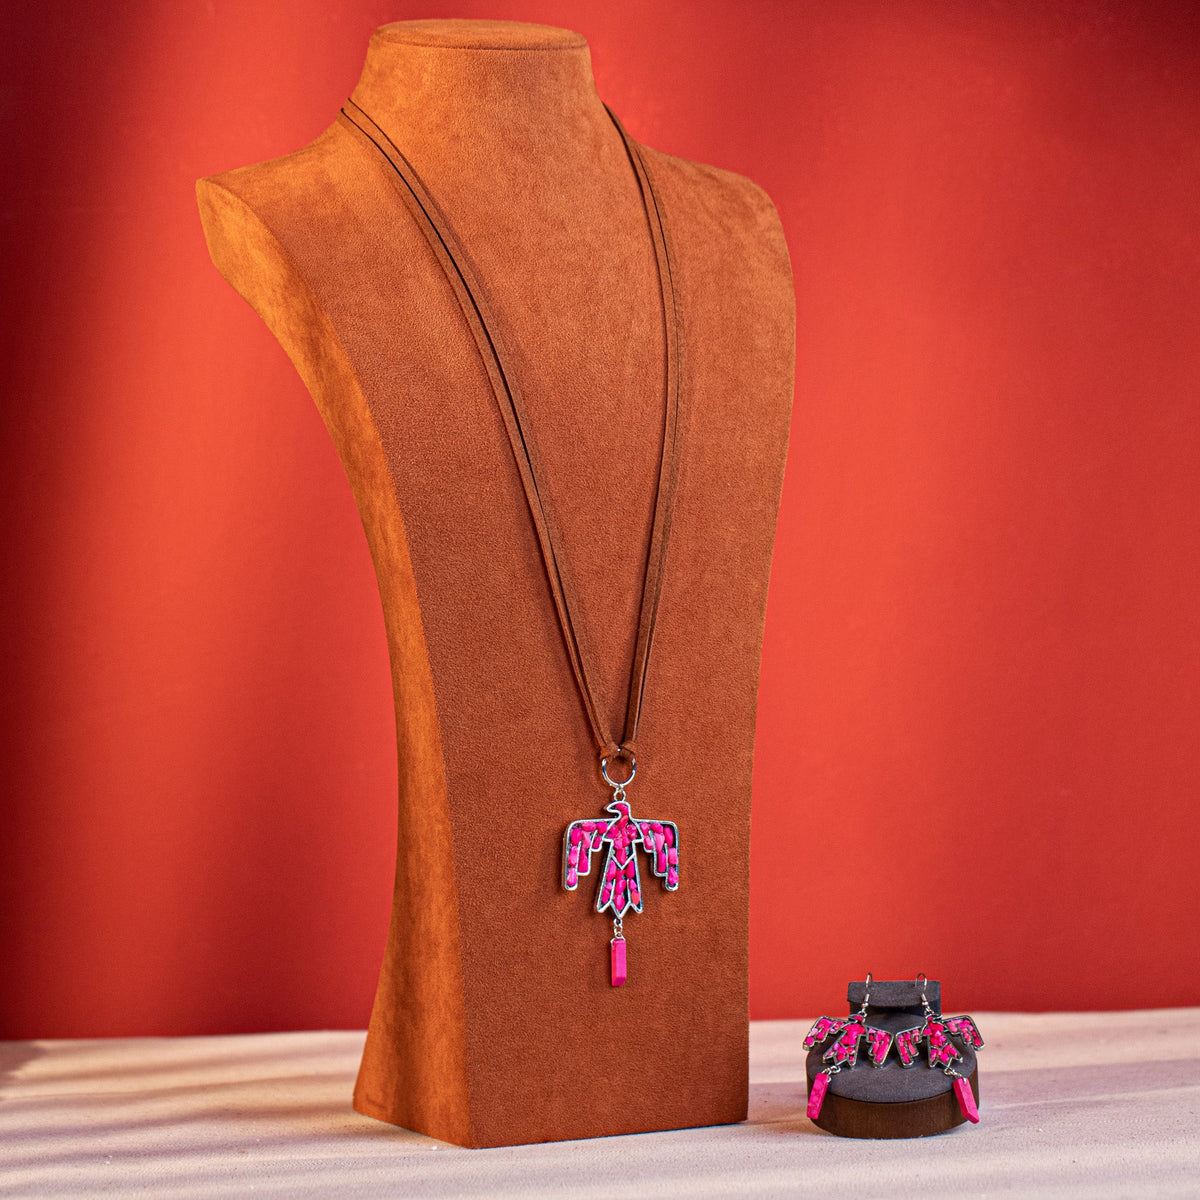 Wrangler Jewelry Sets Thunderbird Pendant Leather Necklace Earrings Set